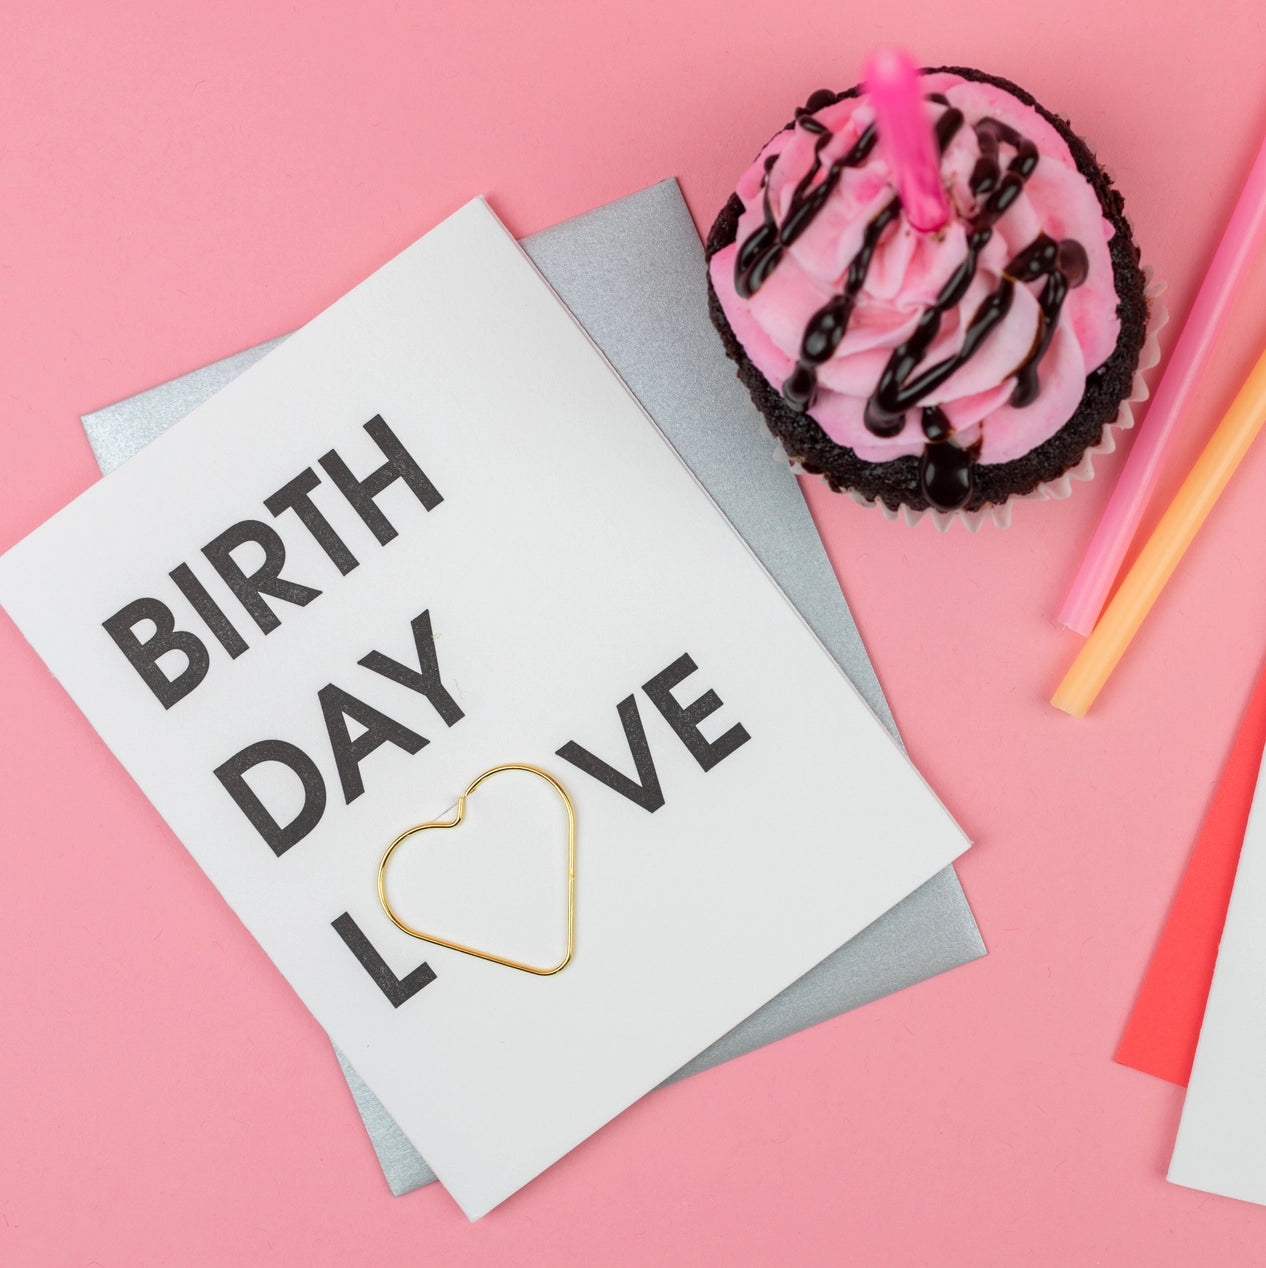 Birthday Love Paper Clip Letterpress Card